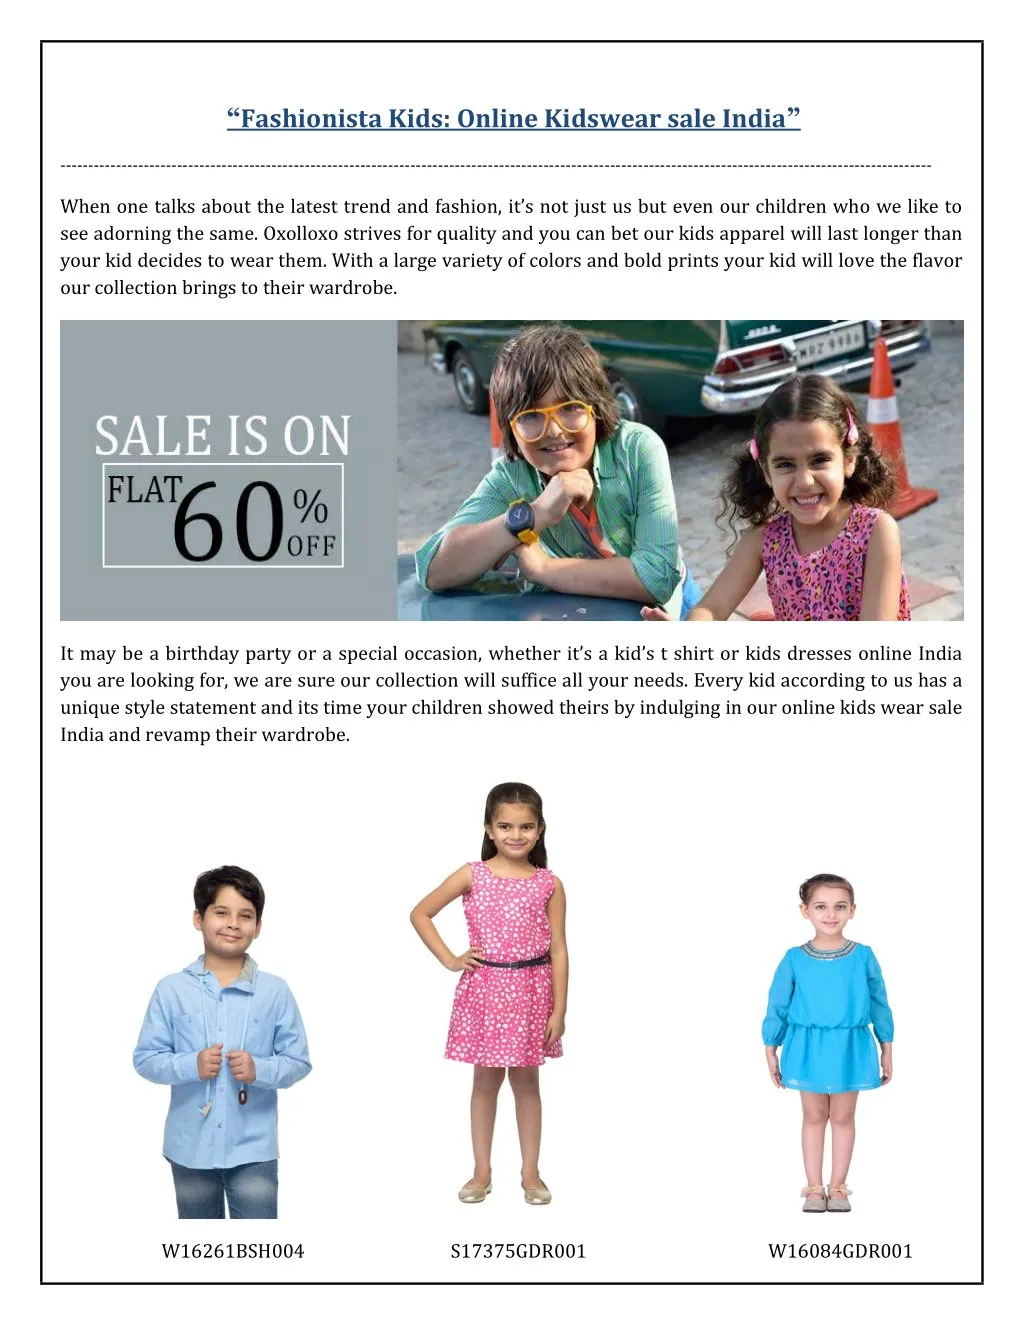 fashionista kids online kidswear sale india